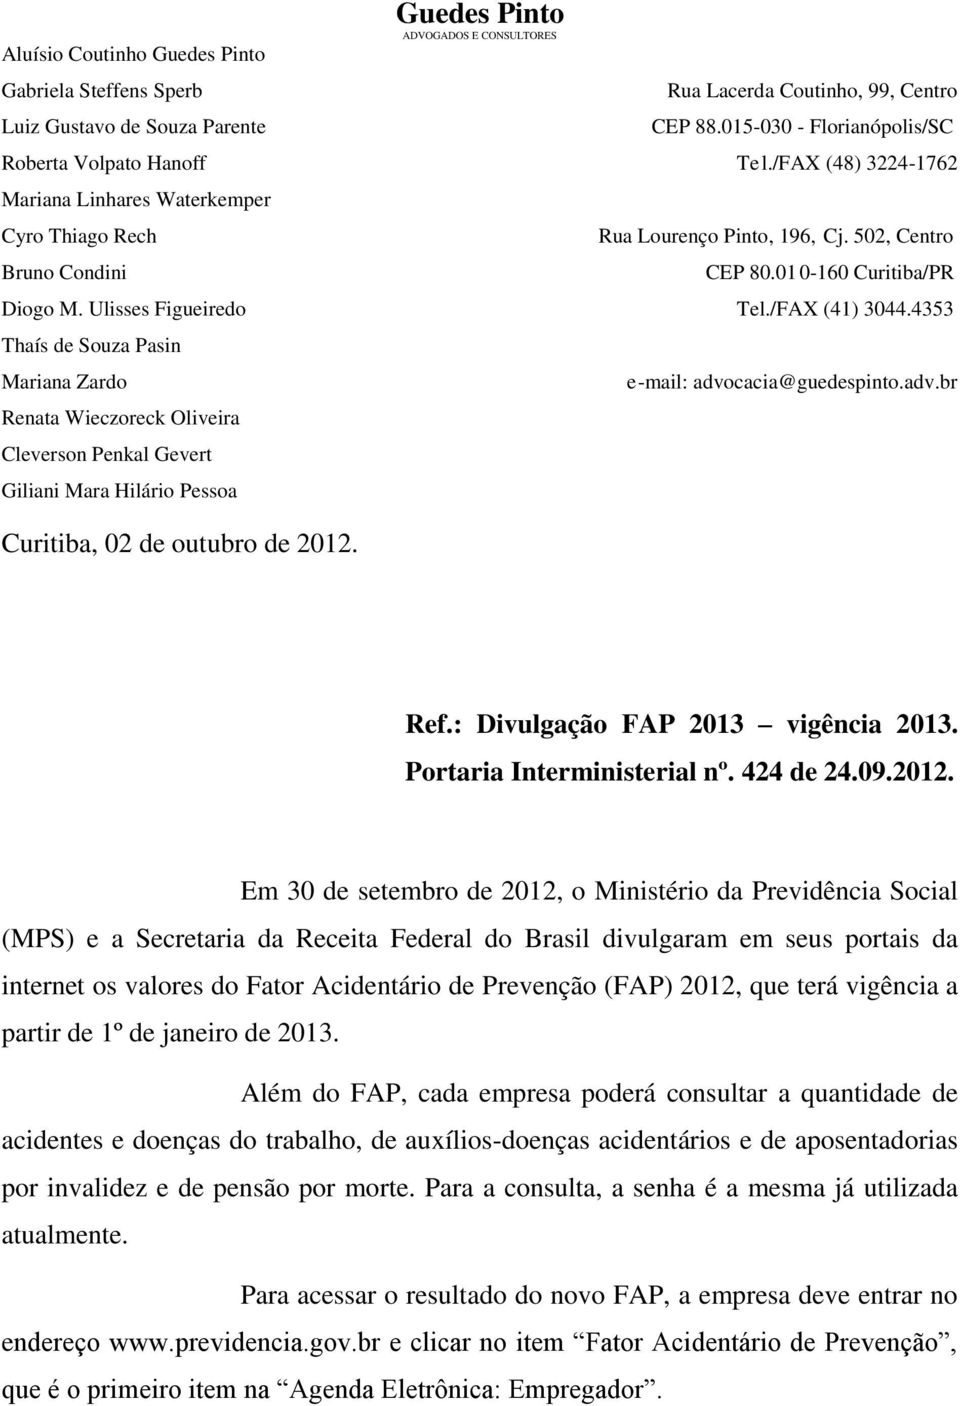 010-160 Curitiba/PR Diogo M. Ulisses Figueiredo Tel./FAX (41) 3044.